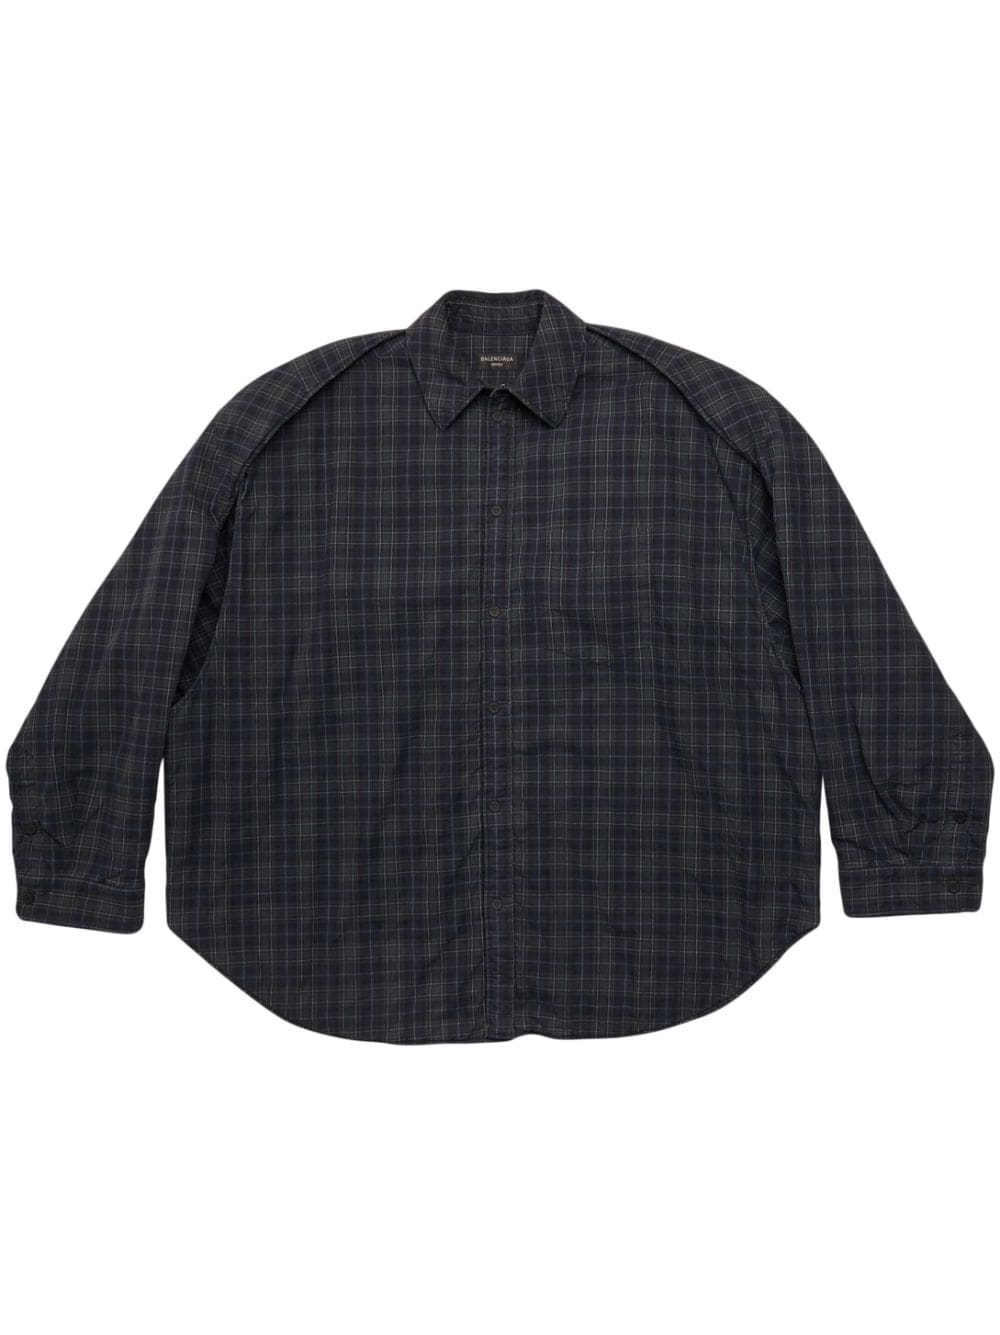 BALENCIAGA Classic Checkered Flannel Shirt Jacket for Women